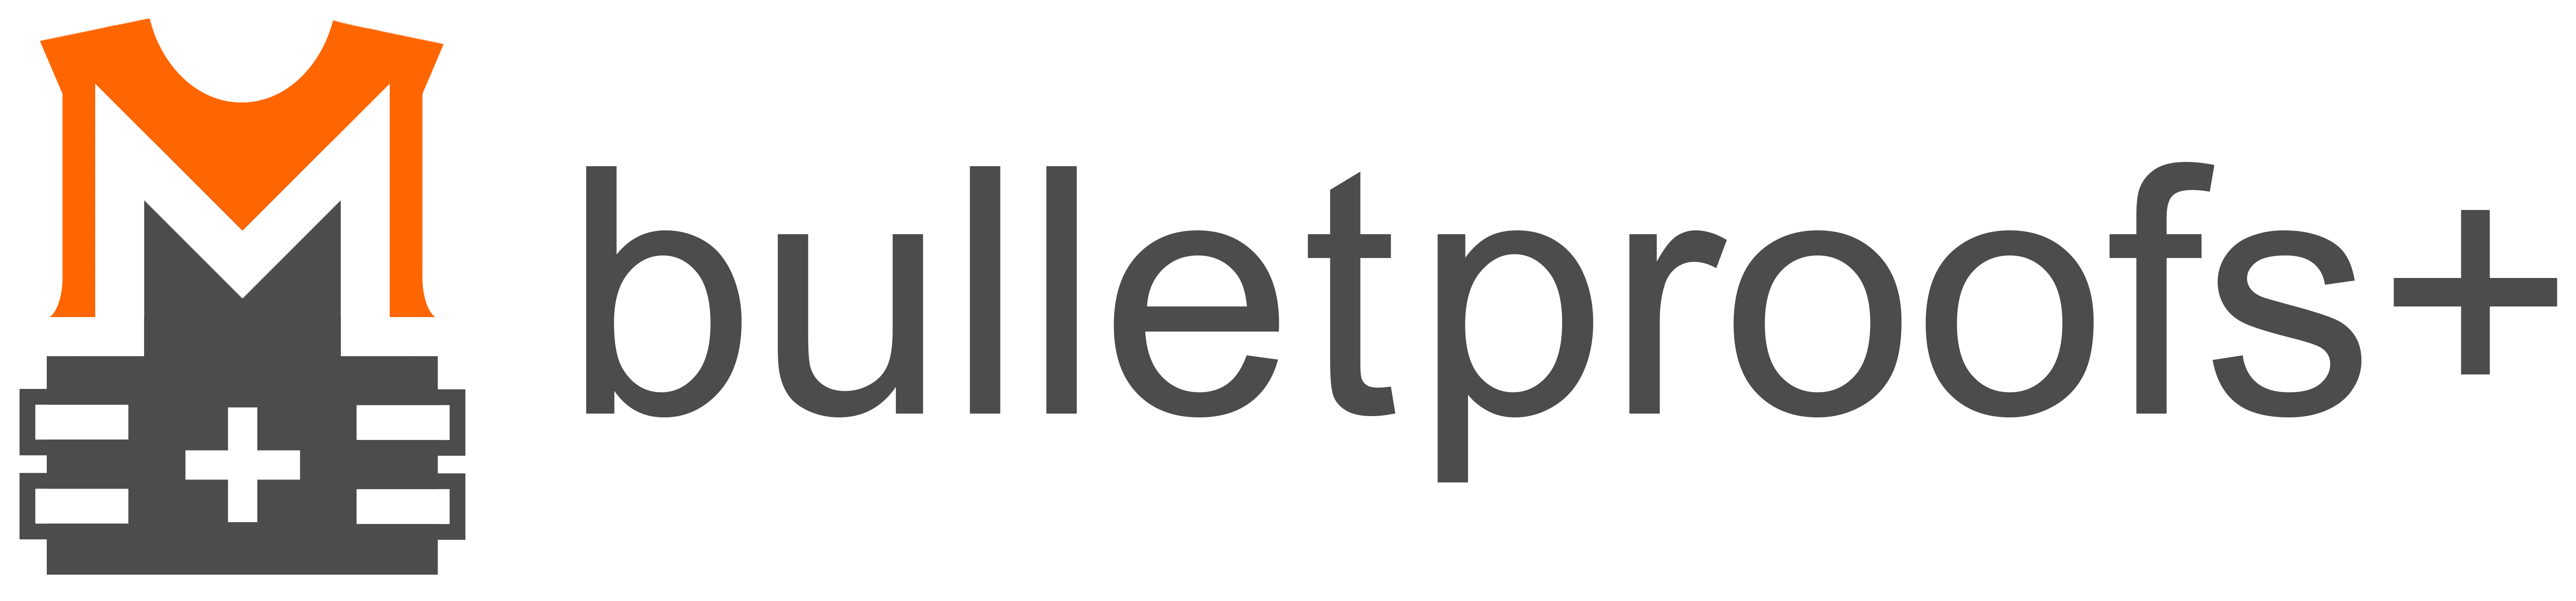 Bulletproofs+ logo